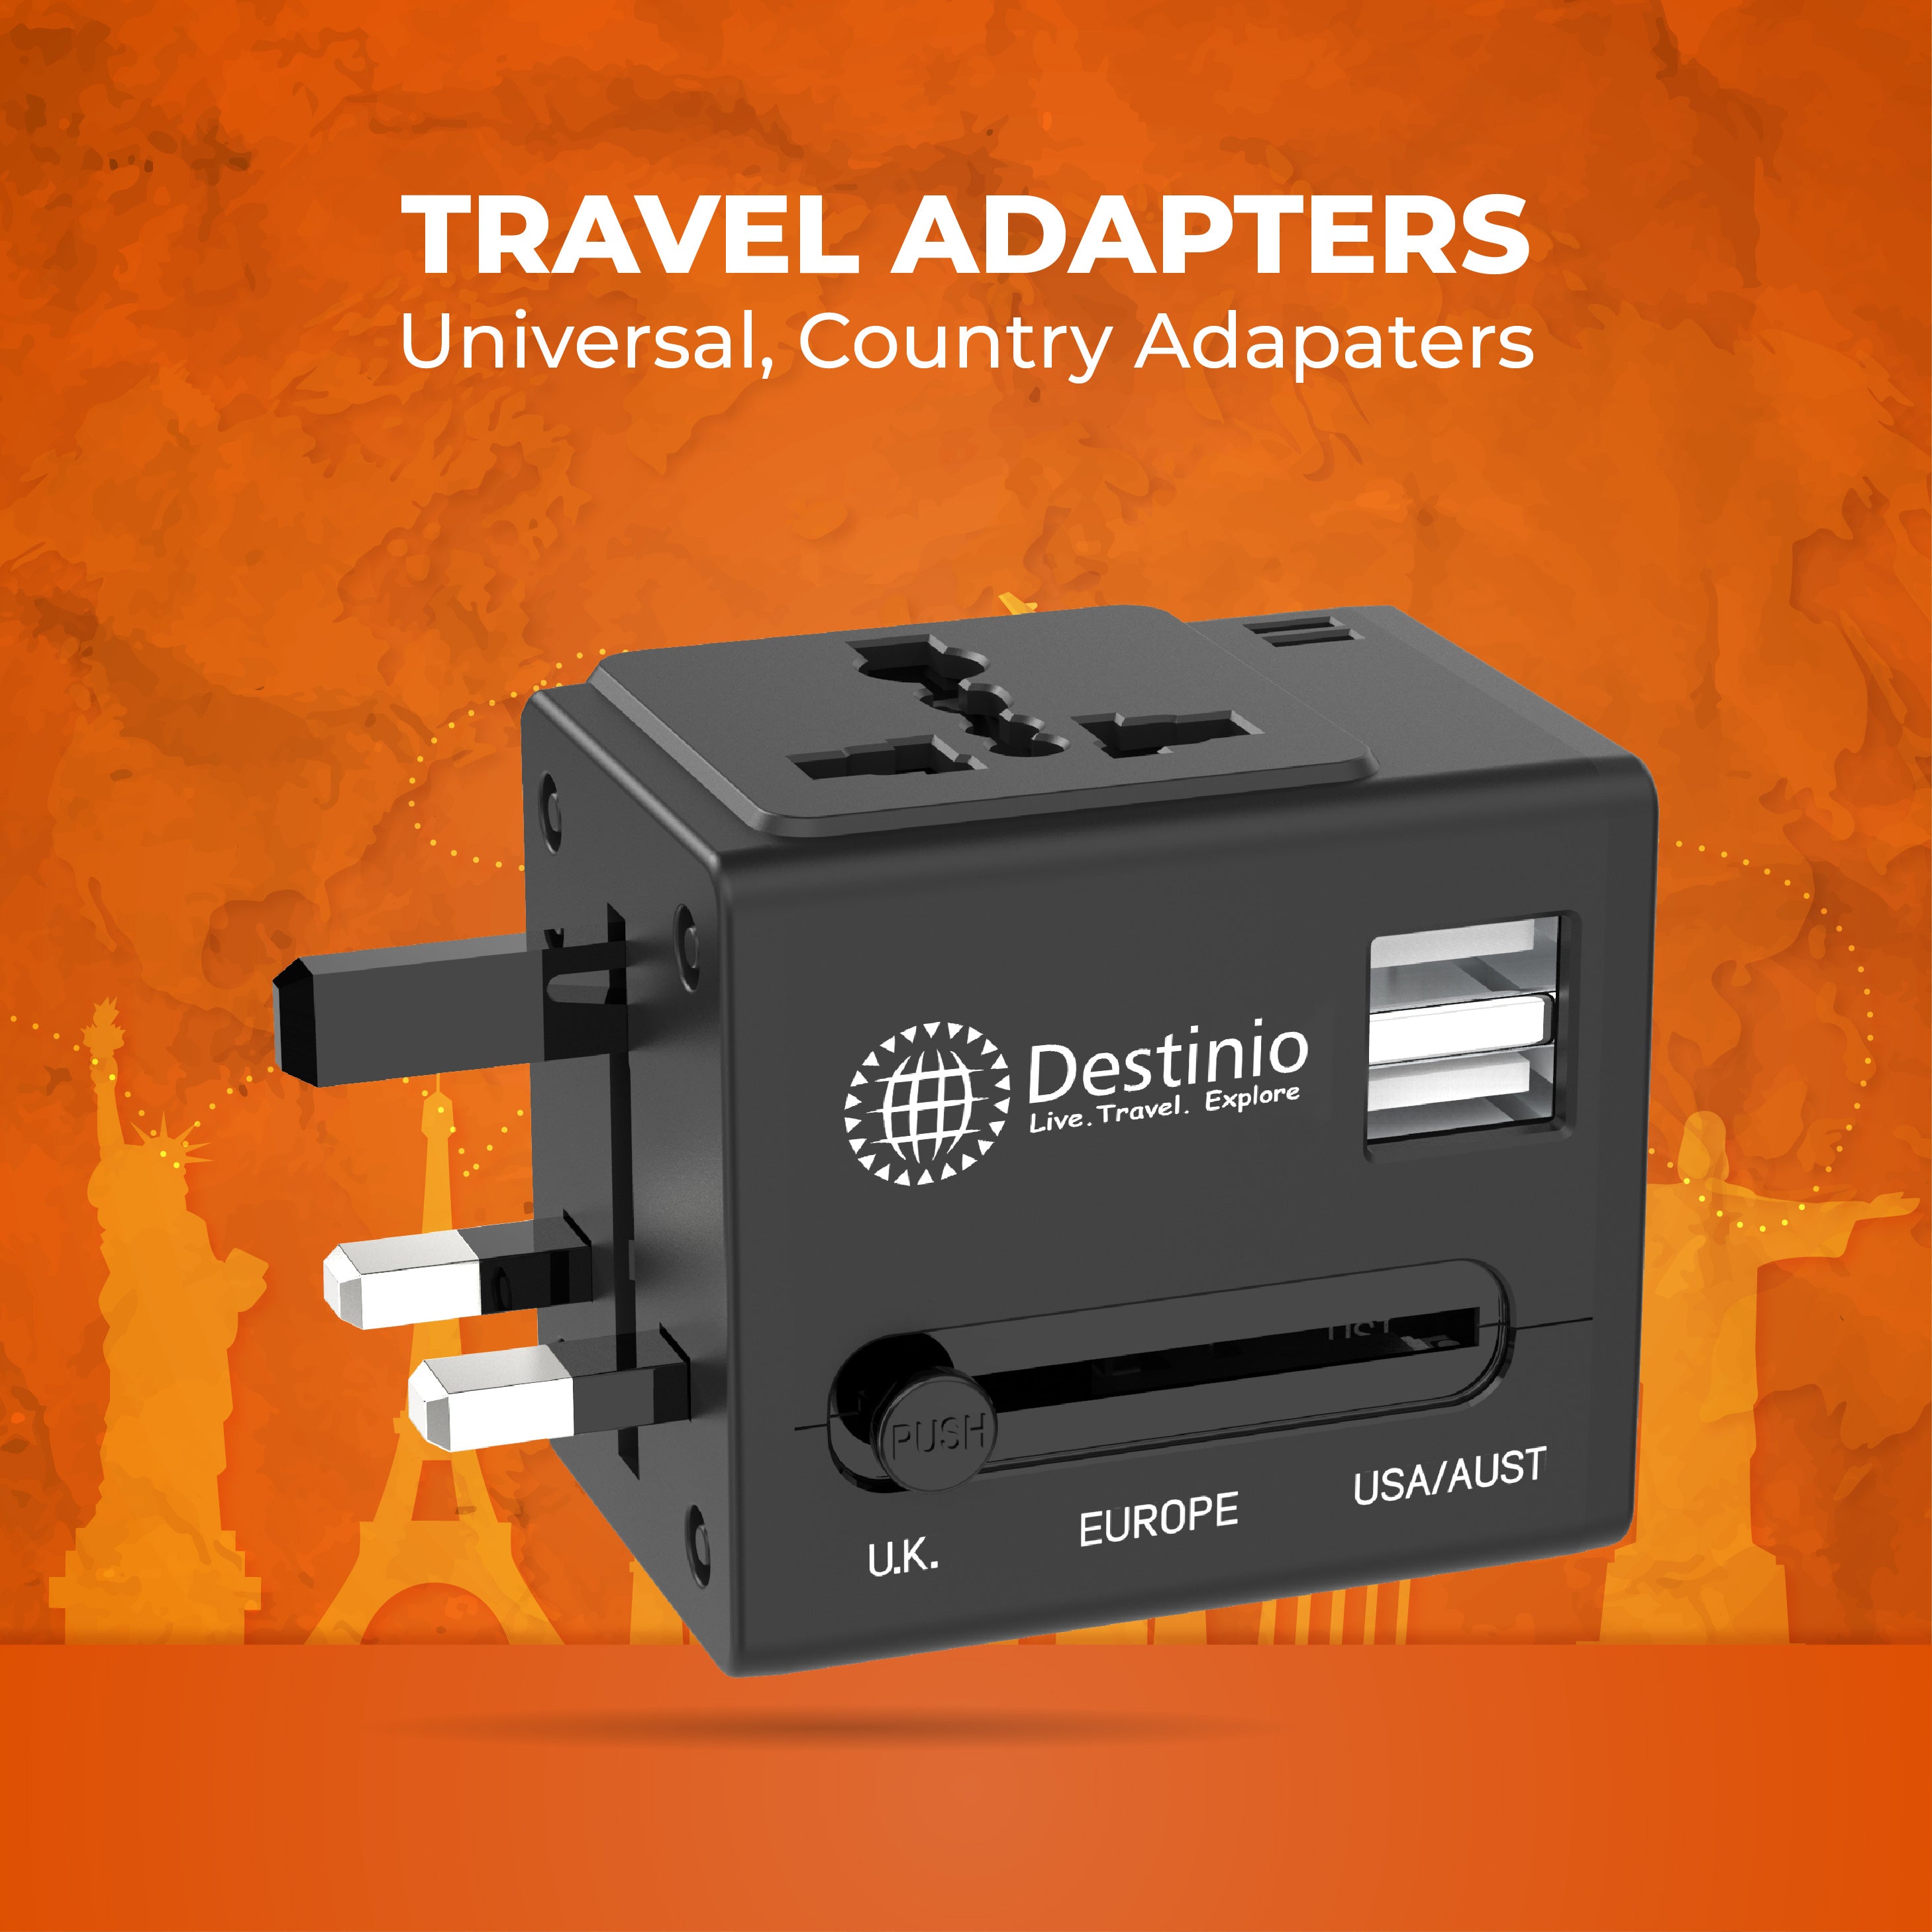 Travel Electronics Travel Accessories Online at Destinio